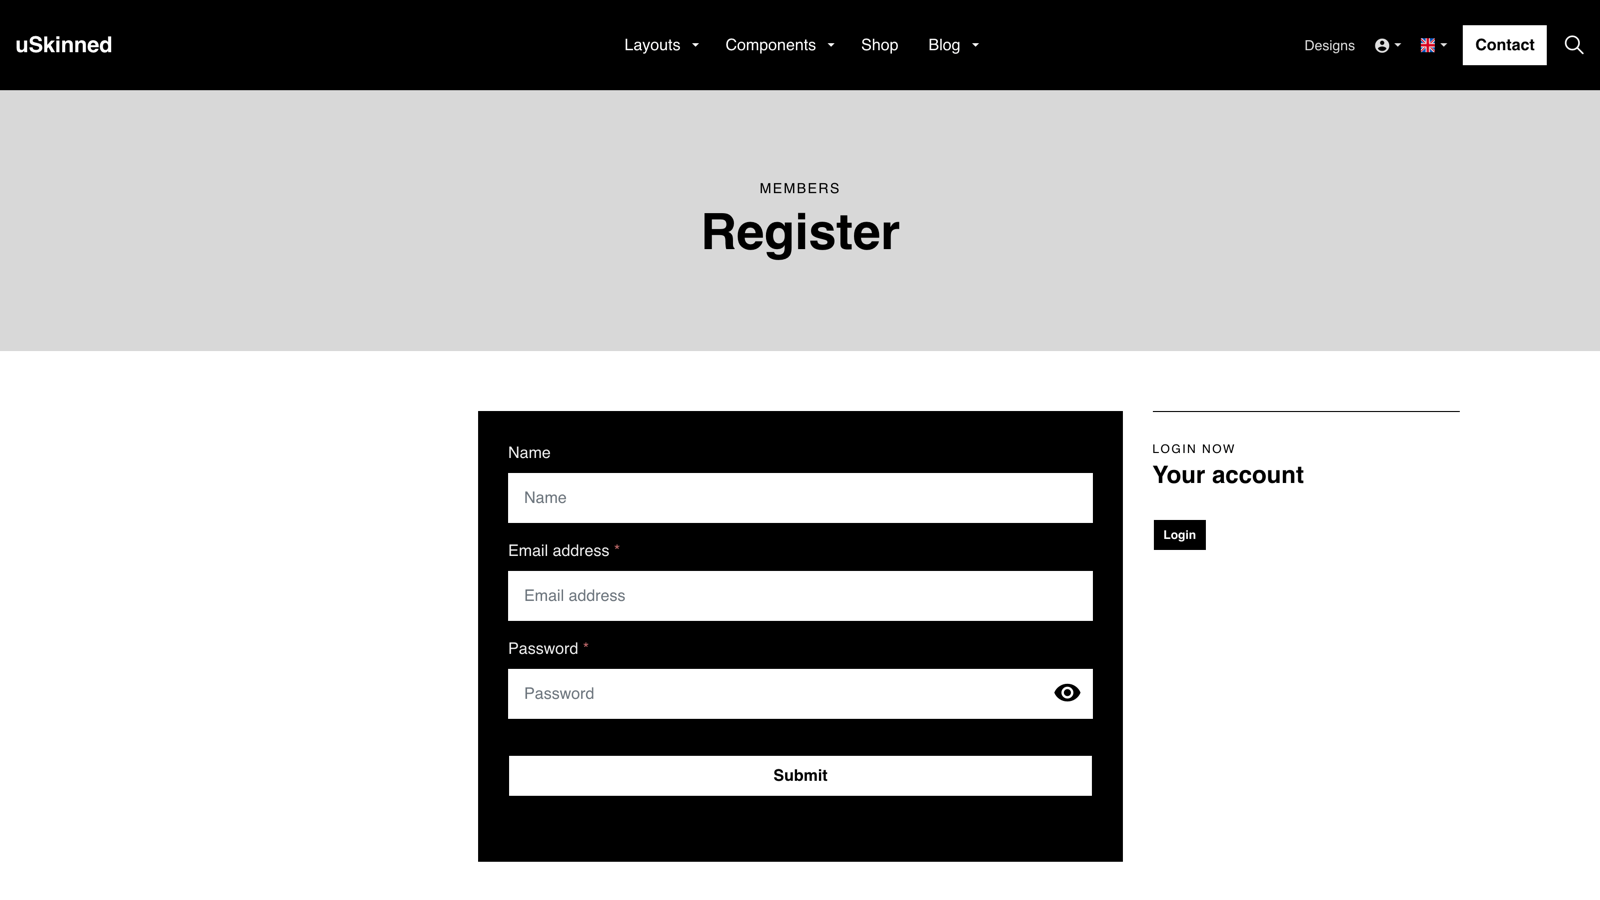 Member registration form on website powered by uSkinned for Umbraco.